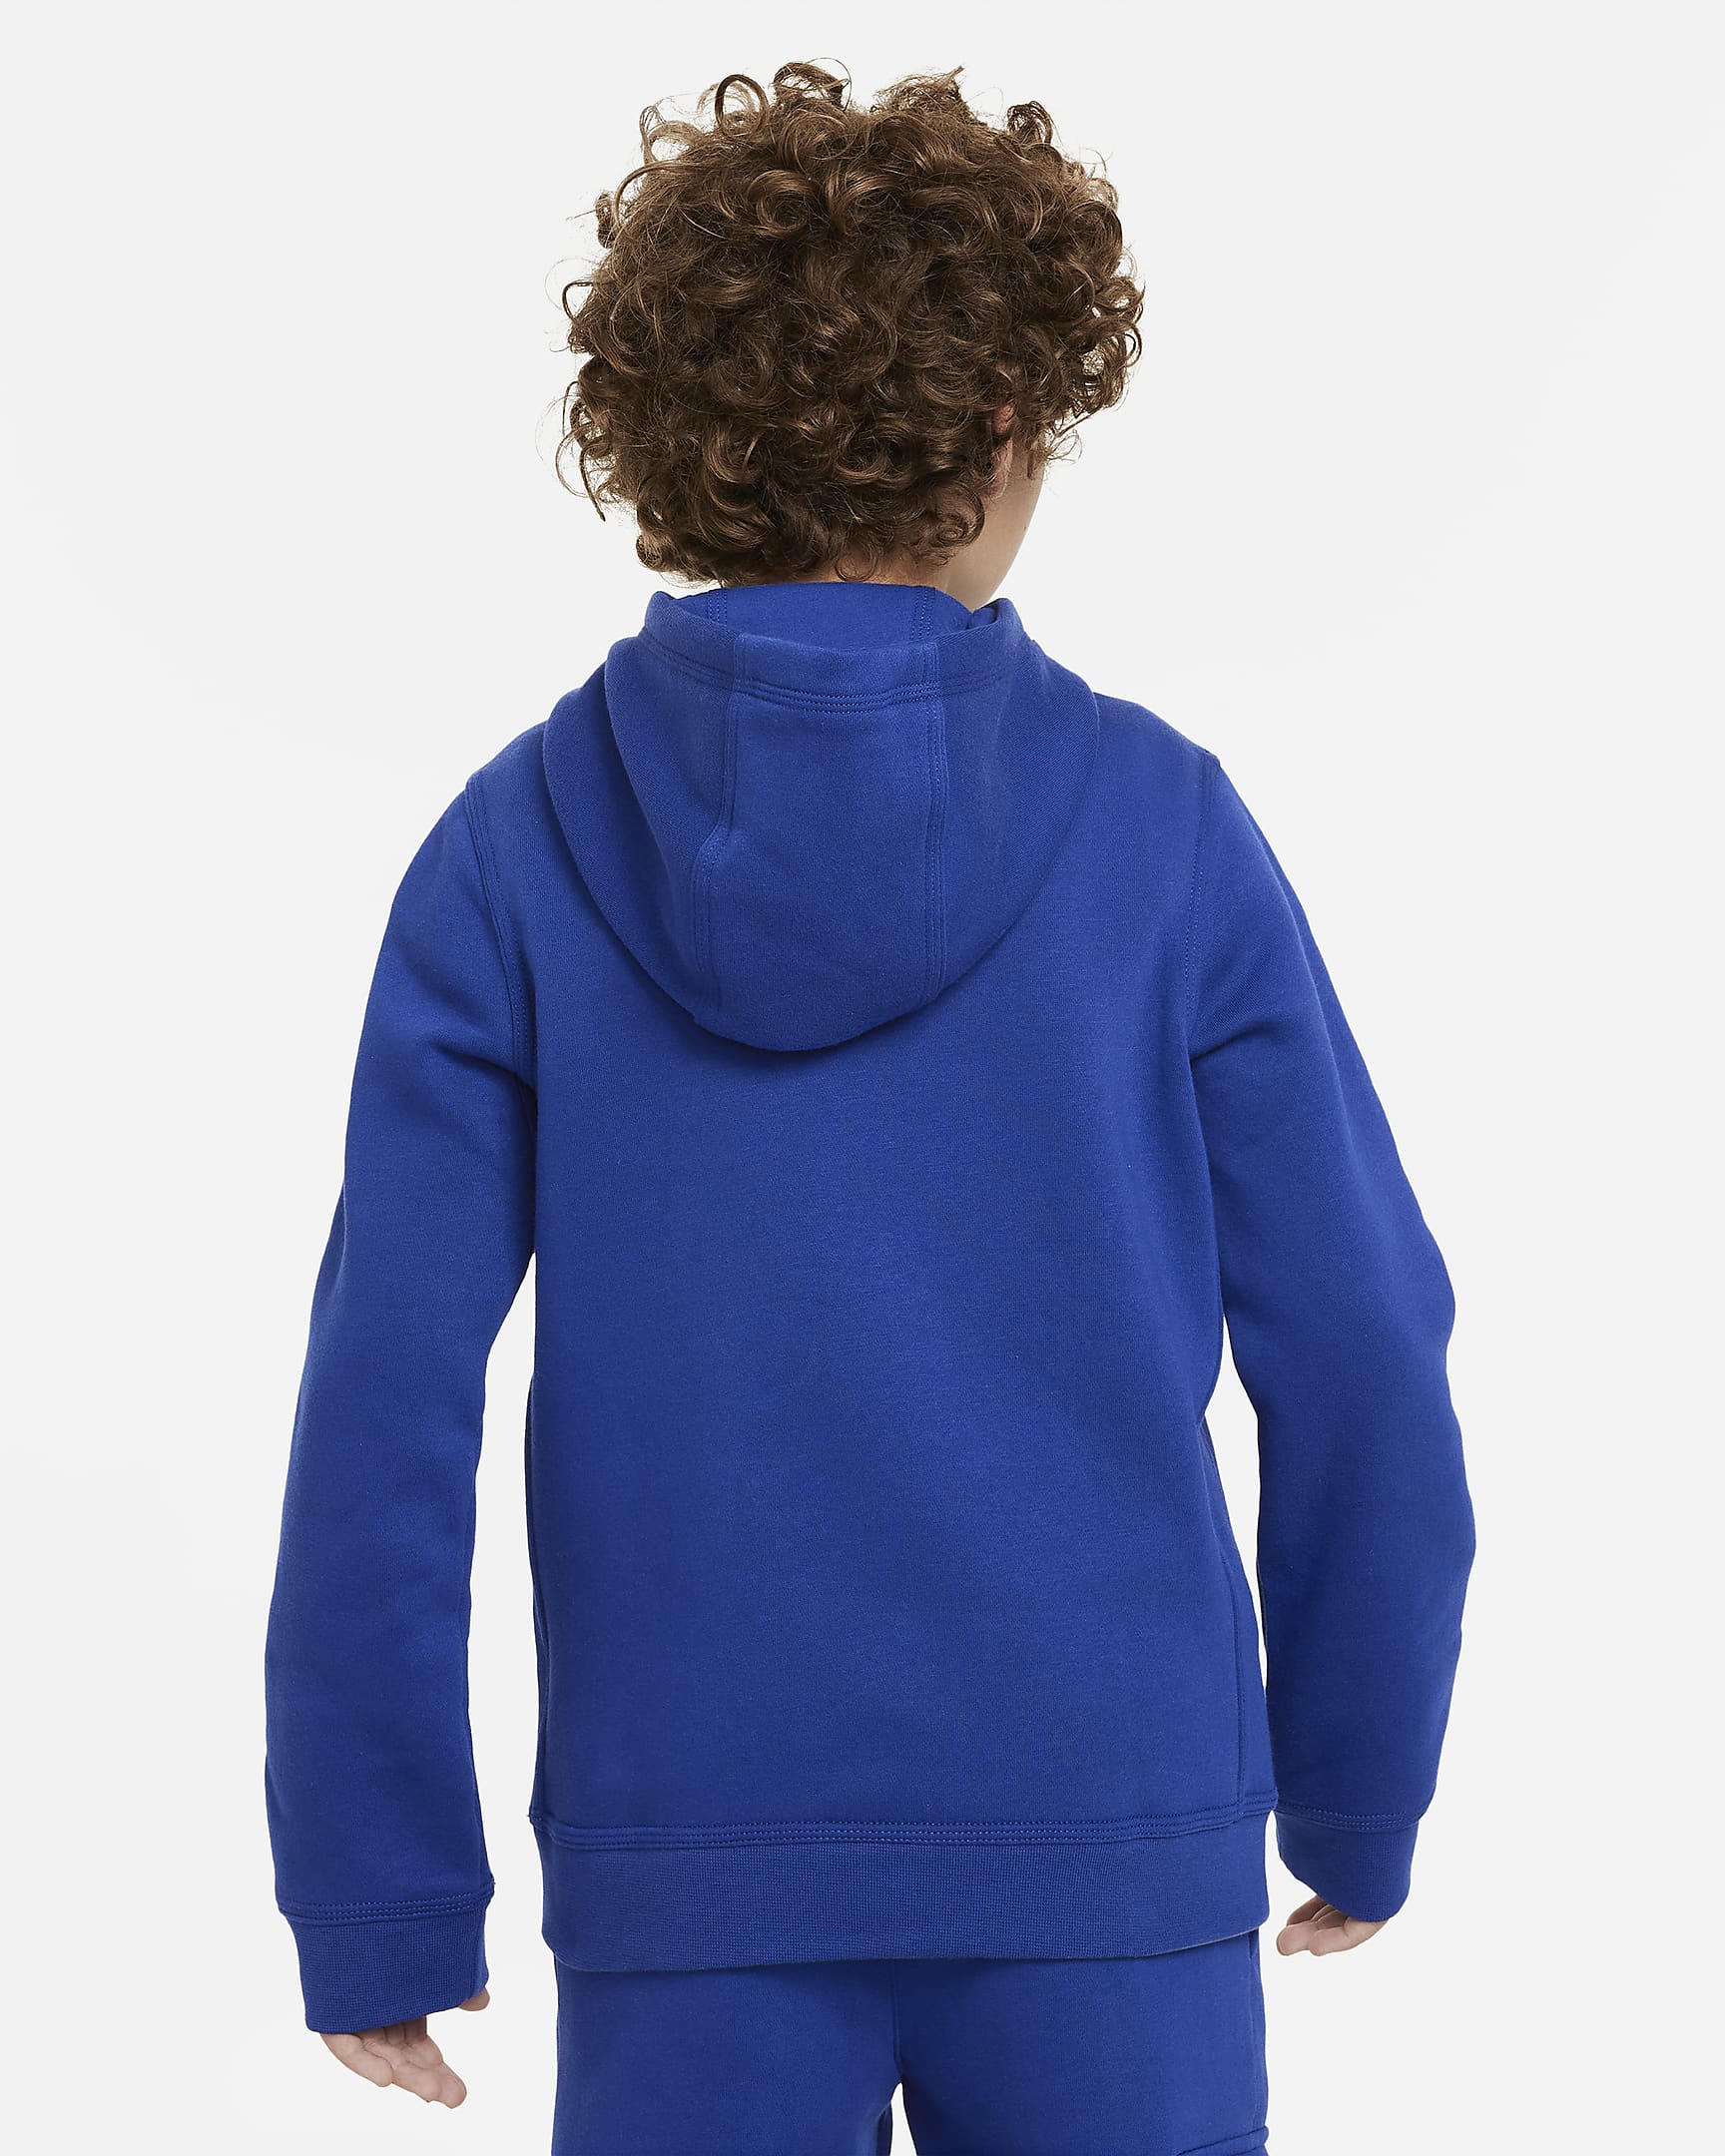 Nike Sportswear Older Kids' (Boys') Fleece Pullover Graphic Hoodie - Deep Royal Blue